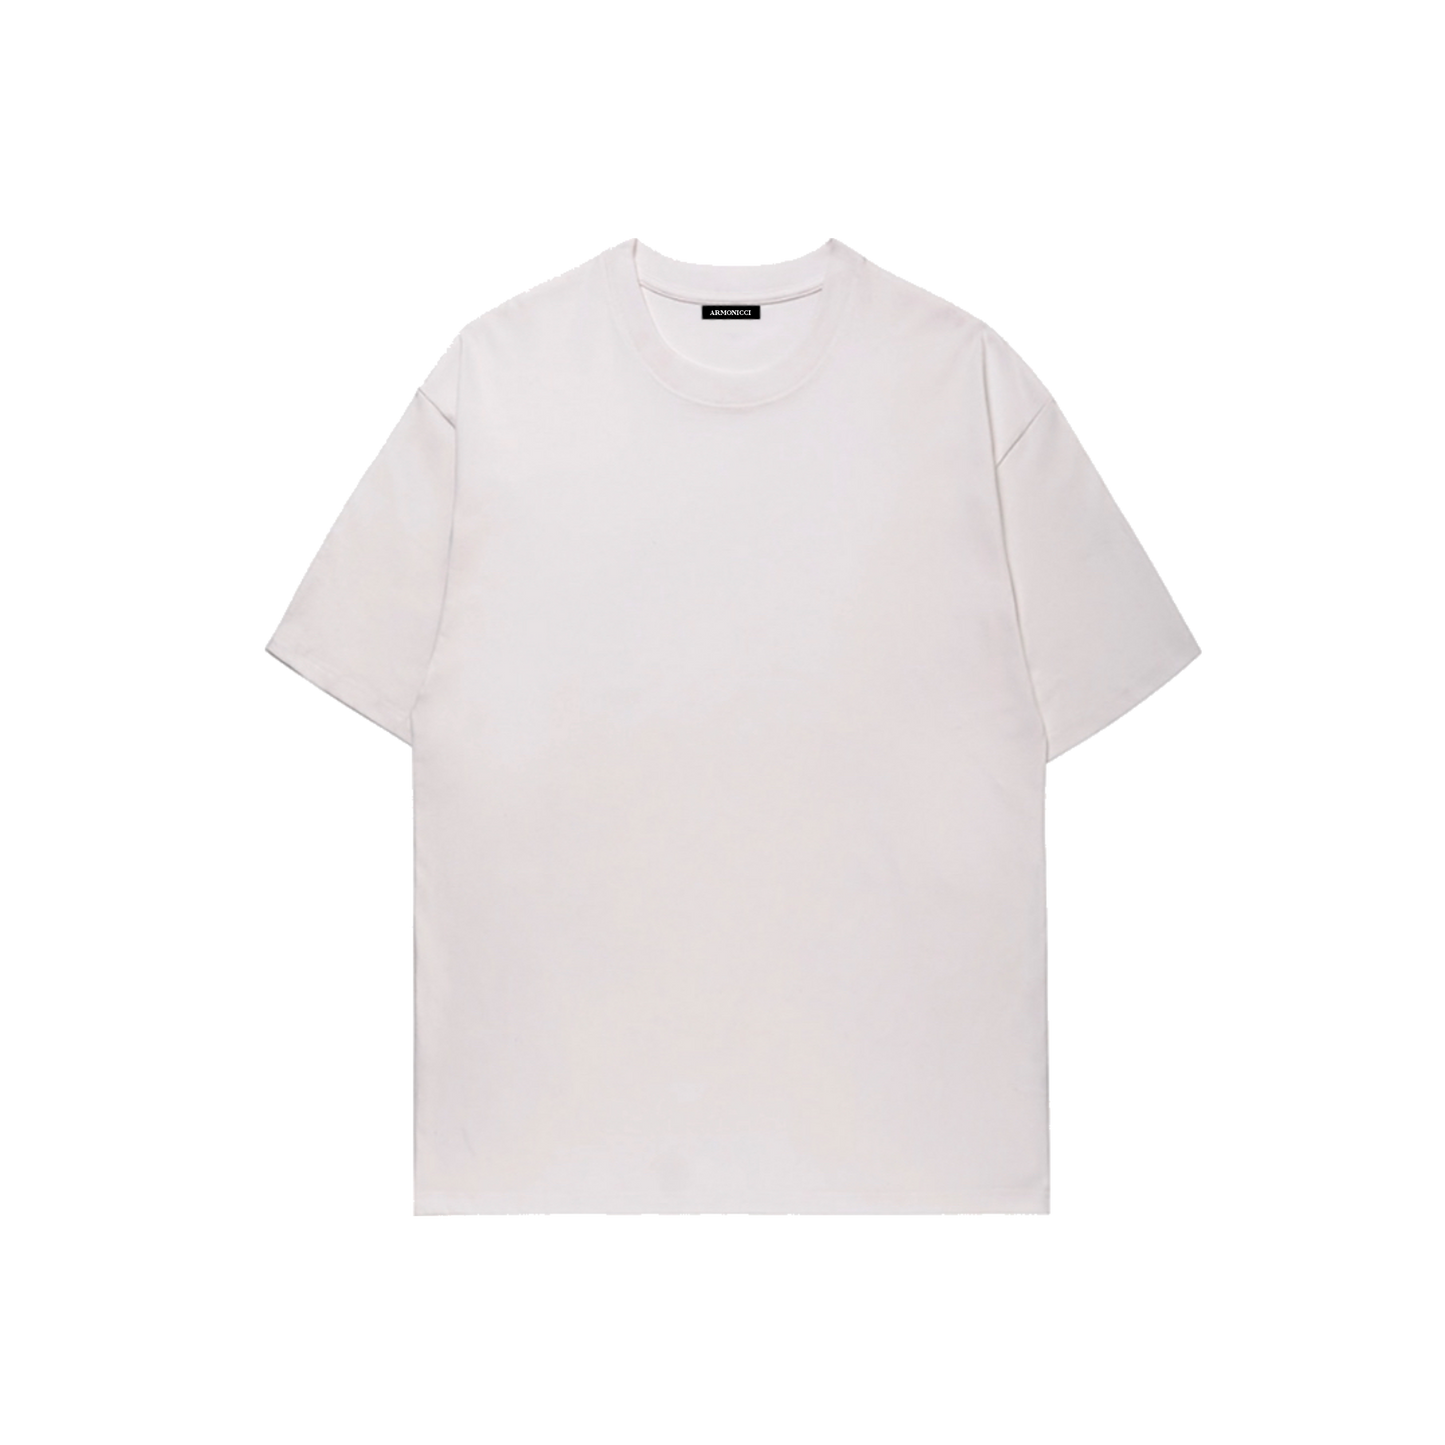 Heavyweight Oversized Minimal White T-Shirt